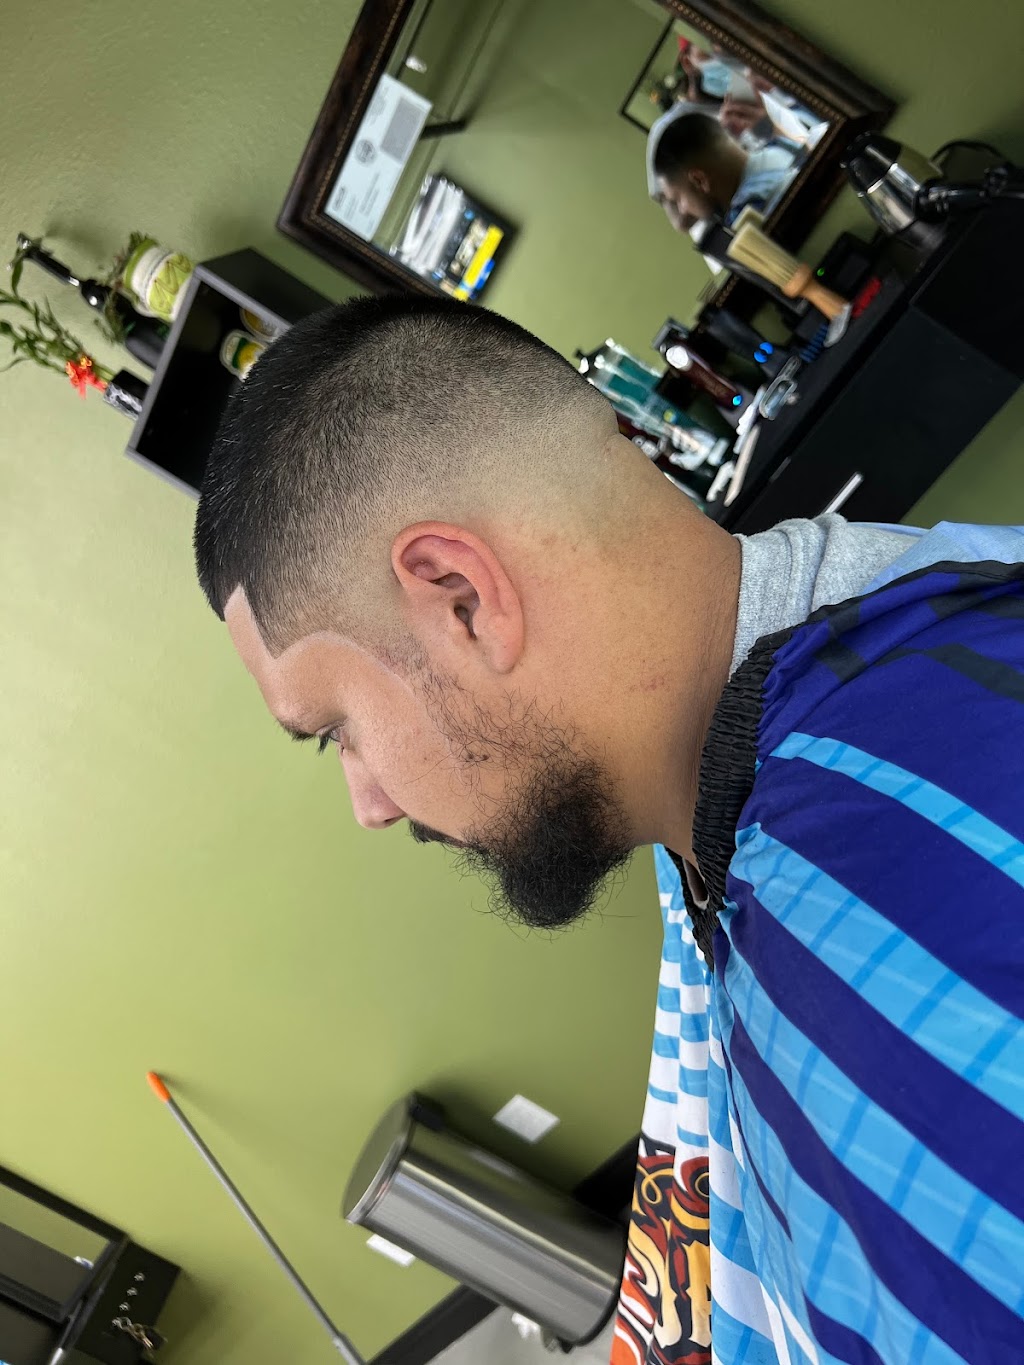 El padrinos barbershop | 8272 Old Redwood Hwy, Cotati, CA 94931 | Phone: (707) 230-9393